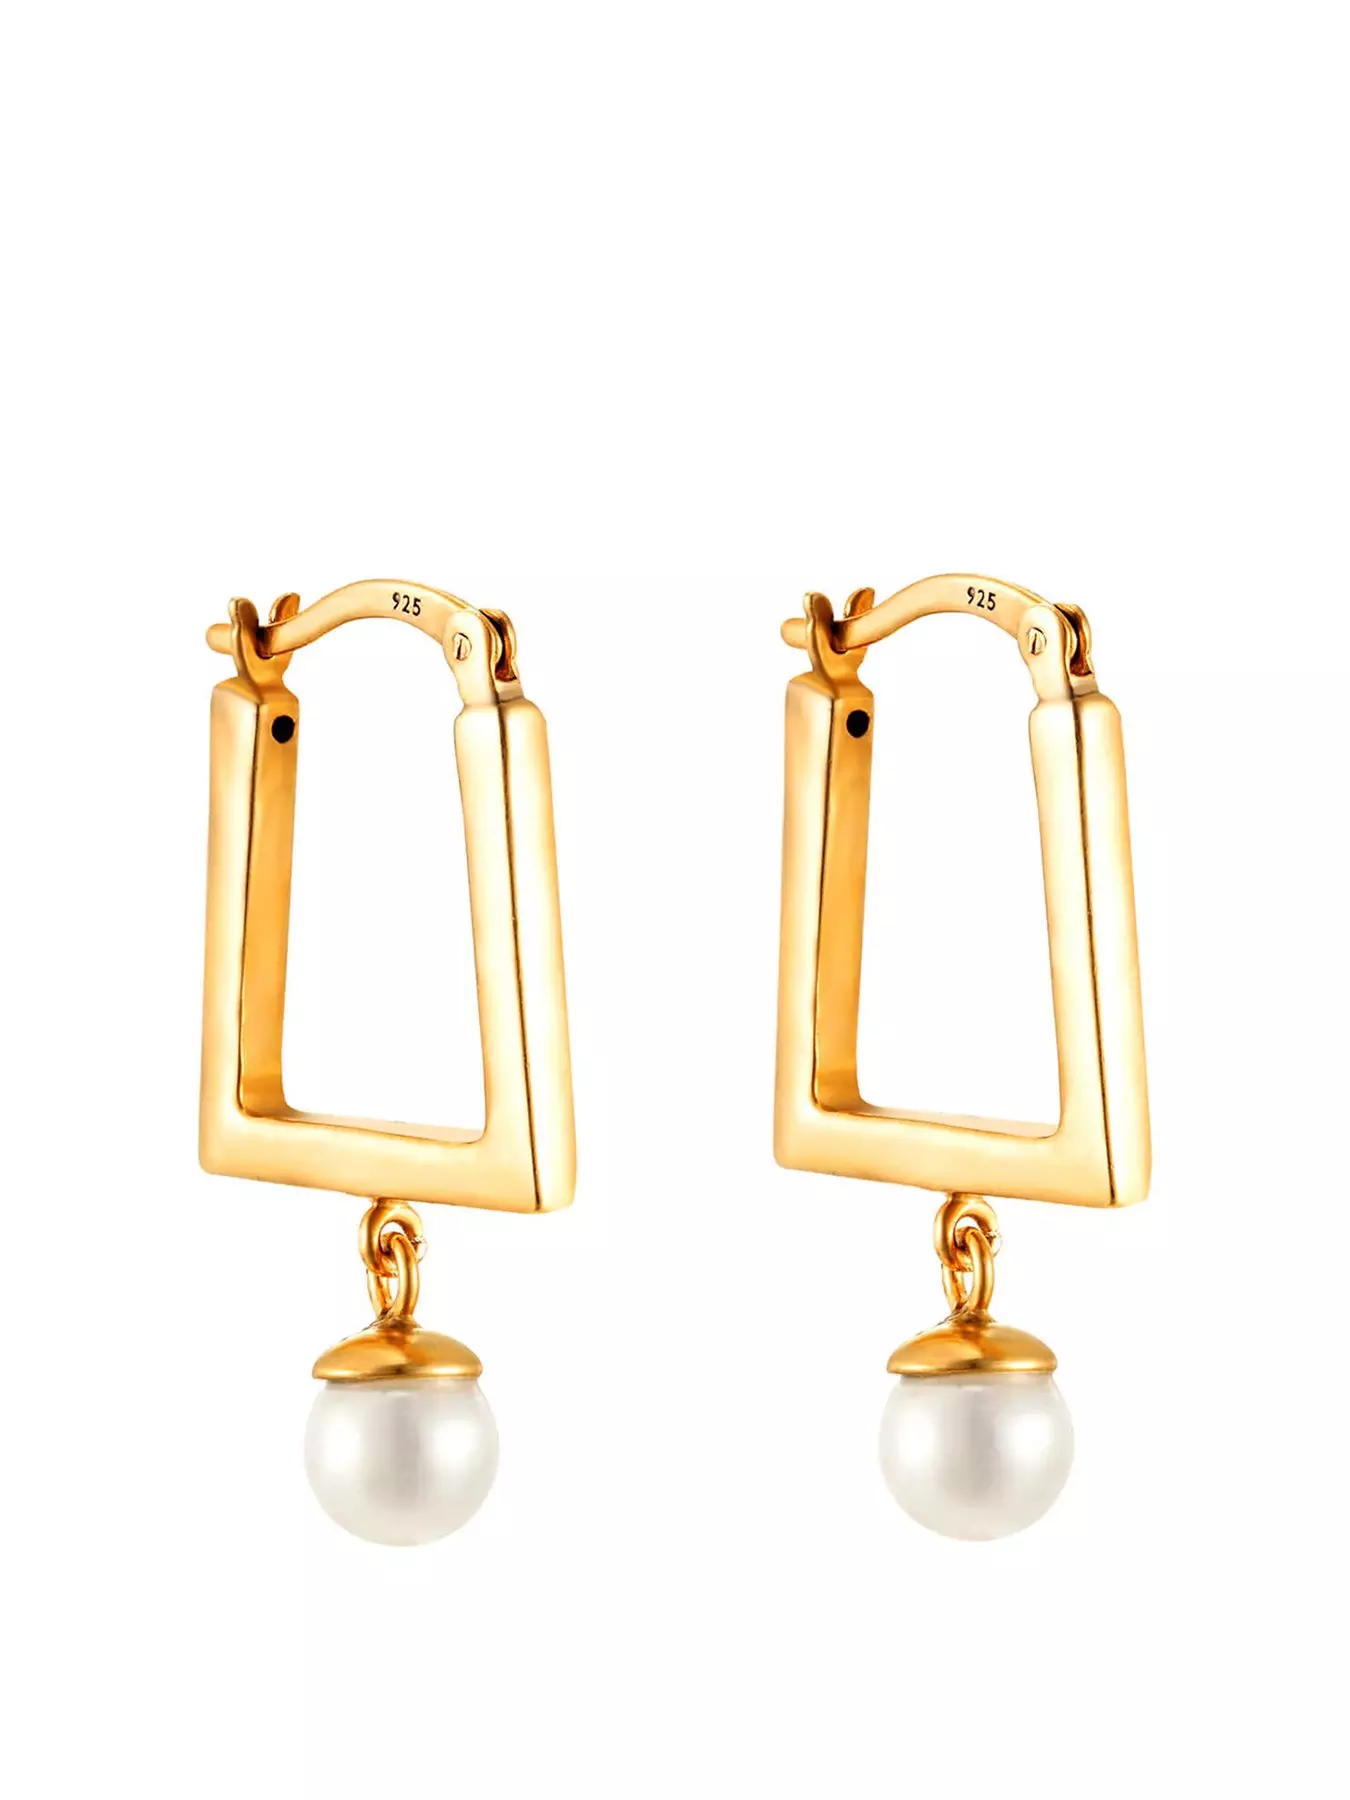 Seol + Gold 18kt gold vermeil 18mm thick Creole hoop earrings